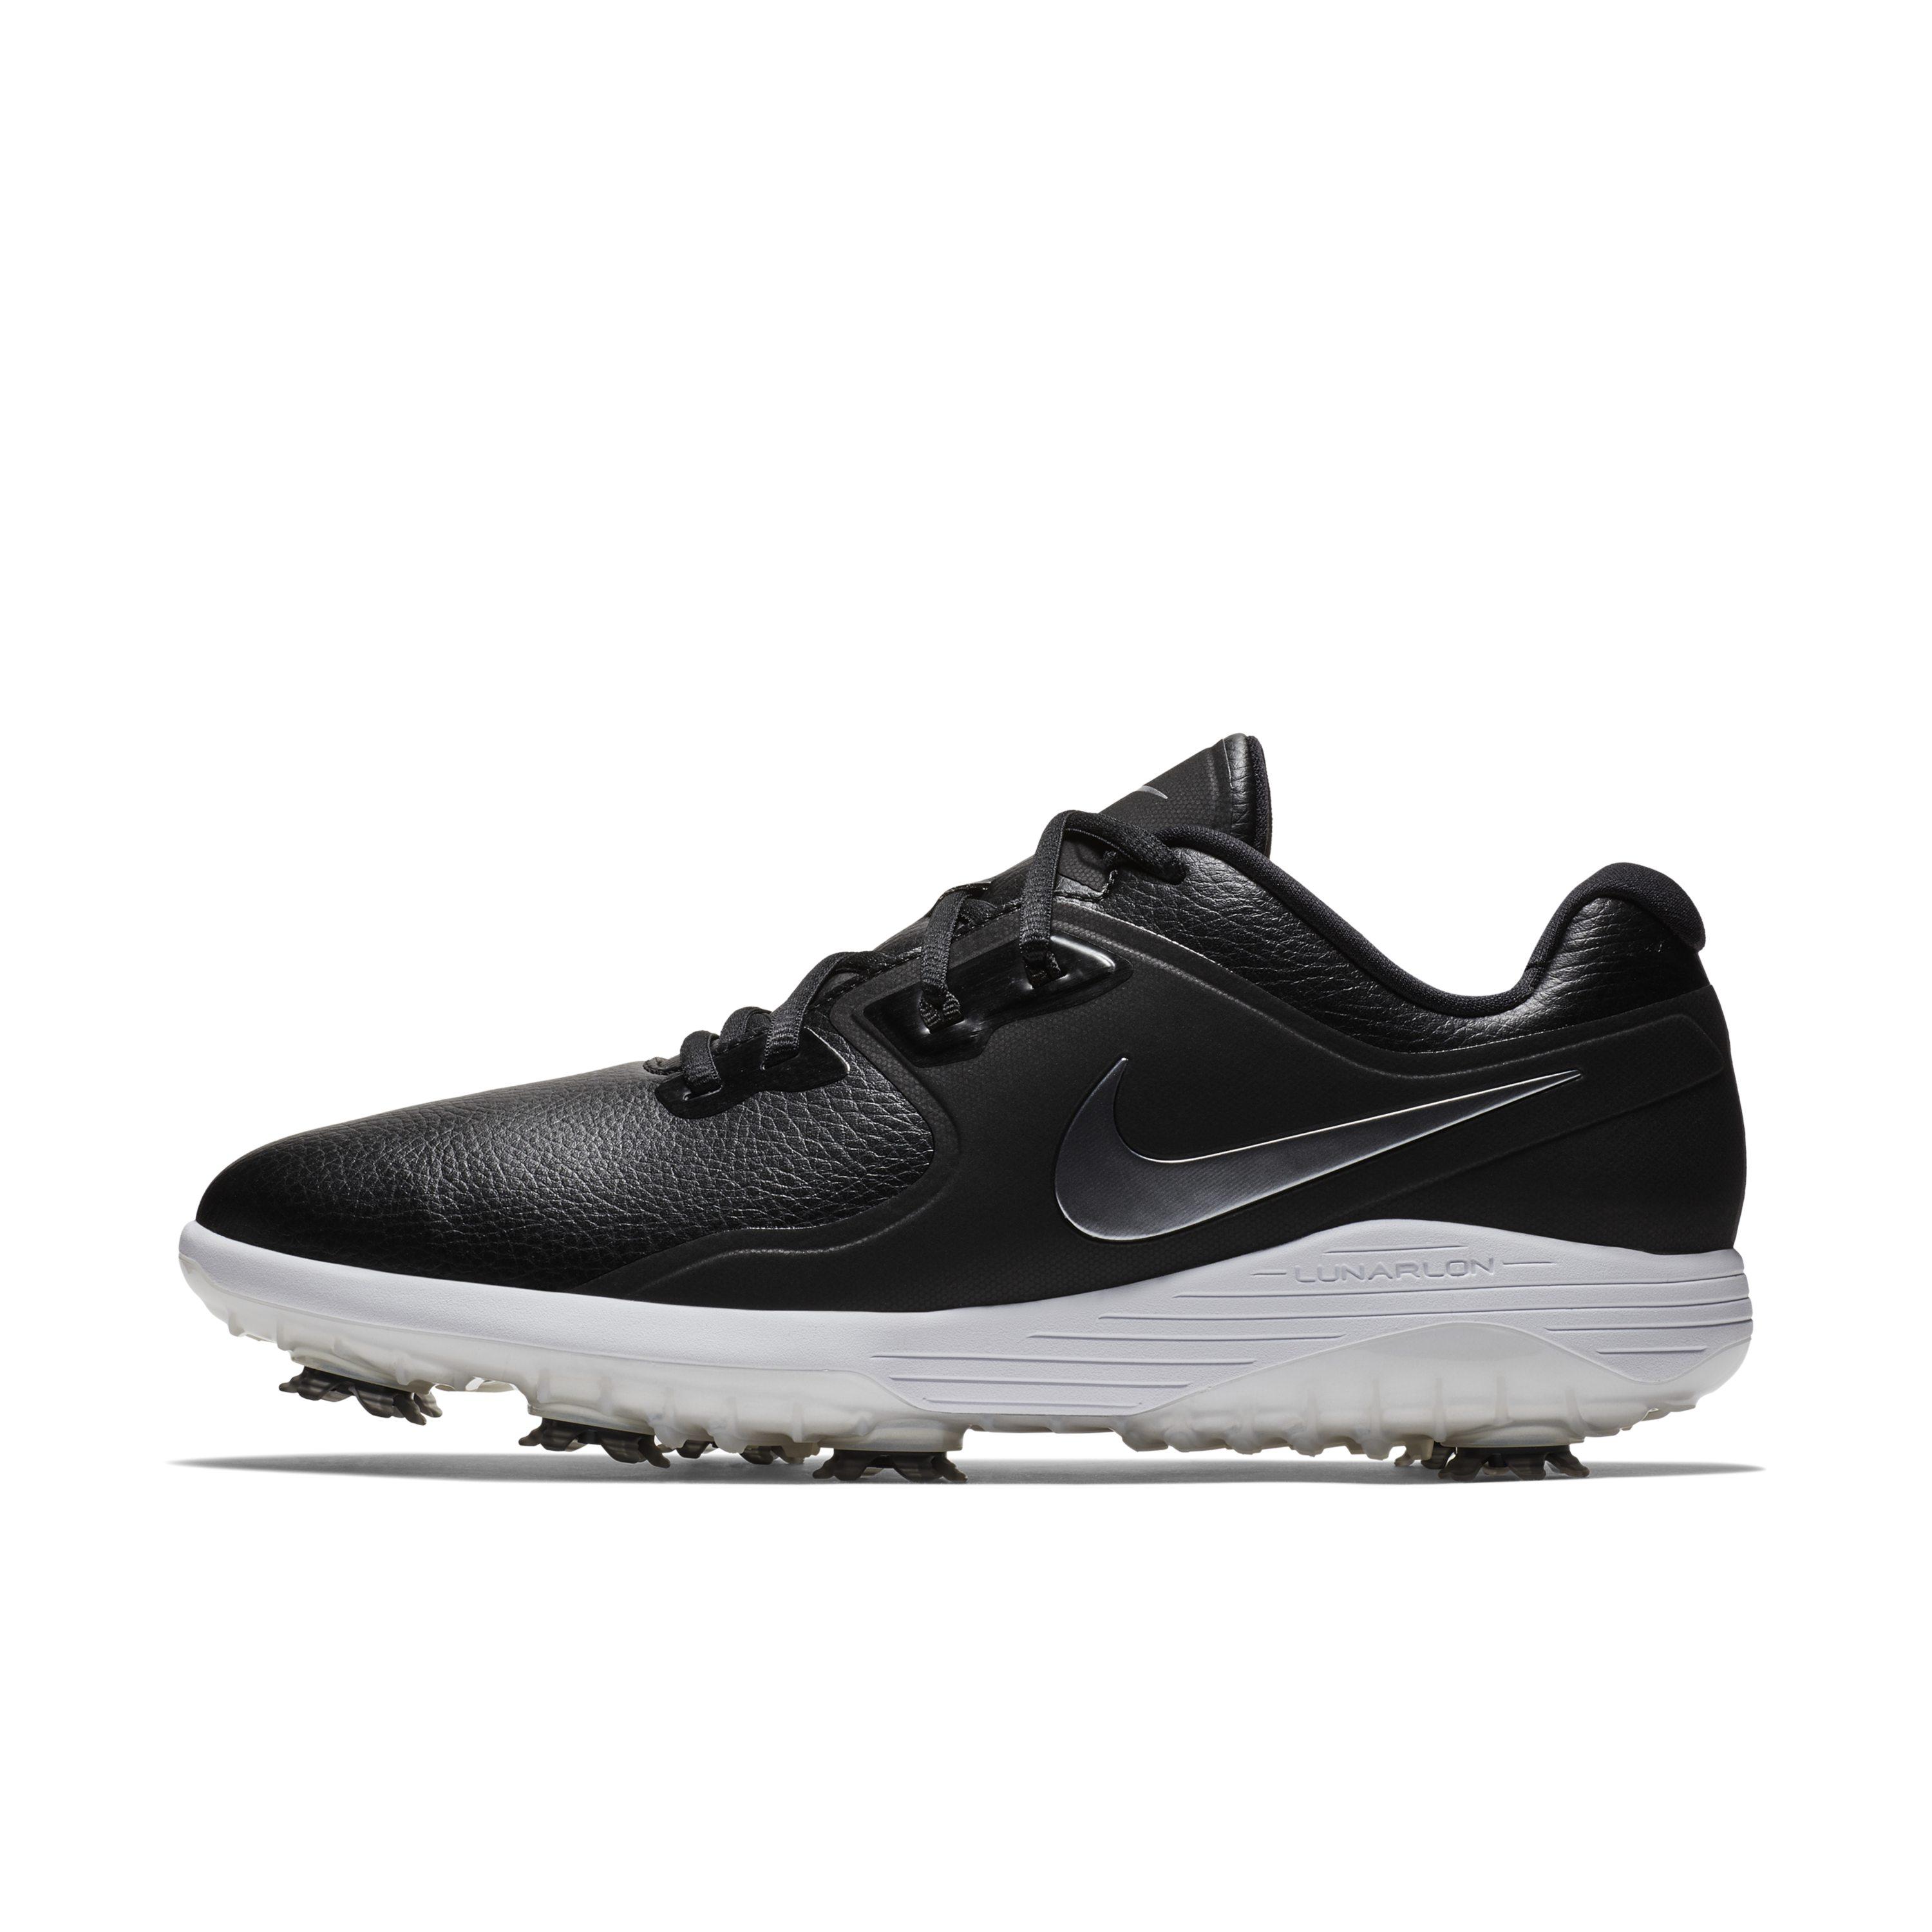 Nike Vapor Pro Golf Shoes in Black for Men - Save 62% - Lyst